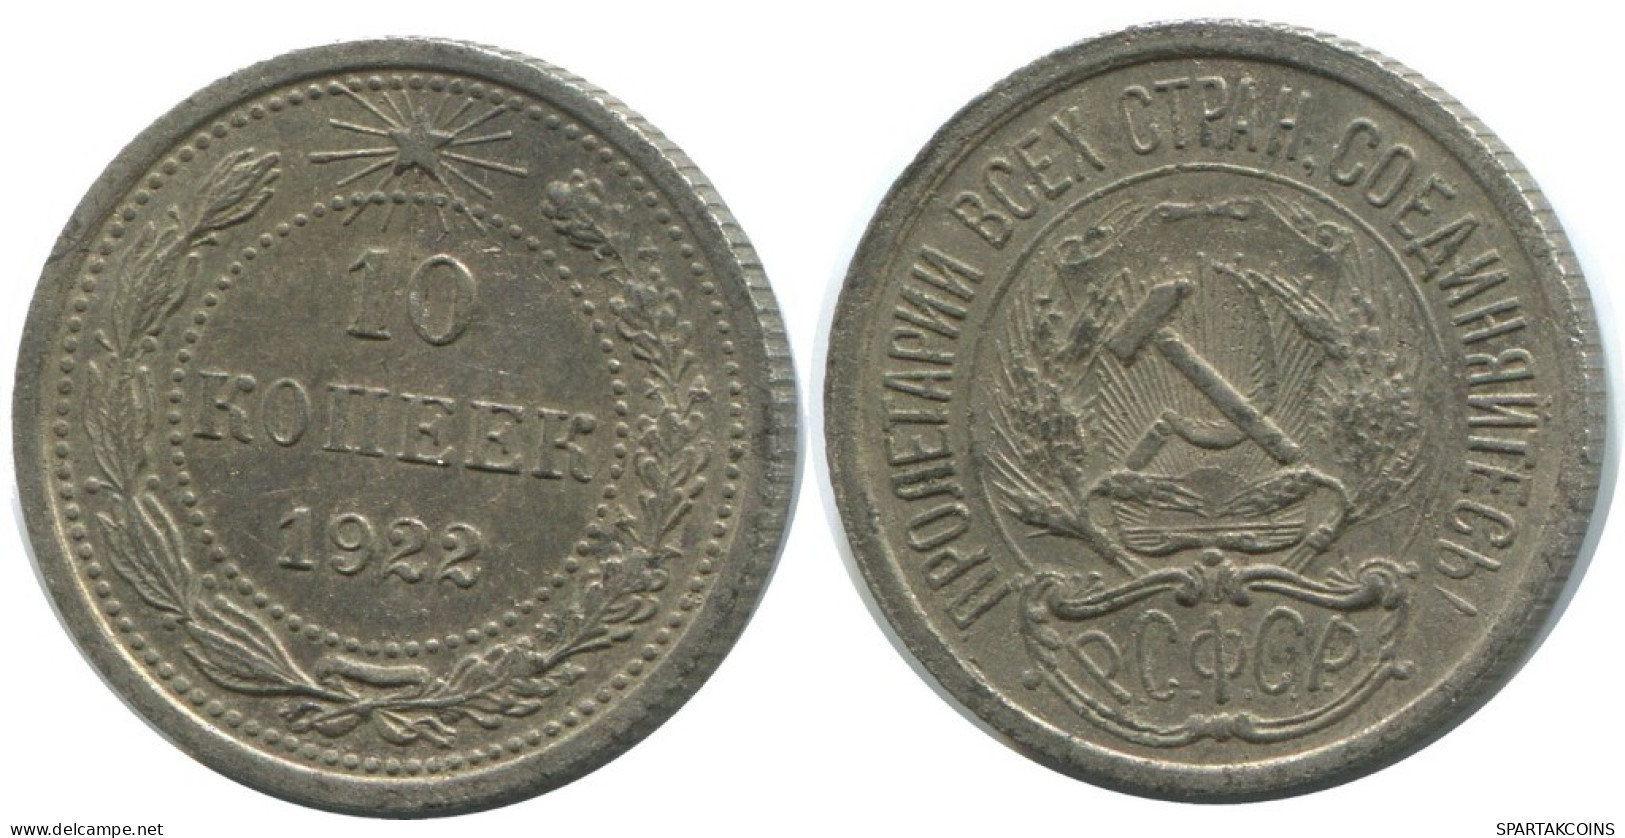 10 KOPEKS 1923 RUSSIA RSFSR SILVER Coin HIGH GRADE #AE868.4.U.A - Russia